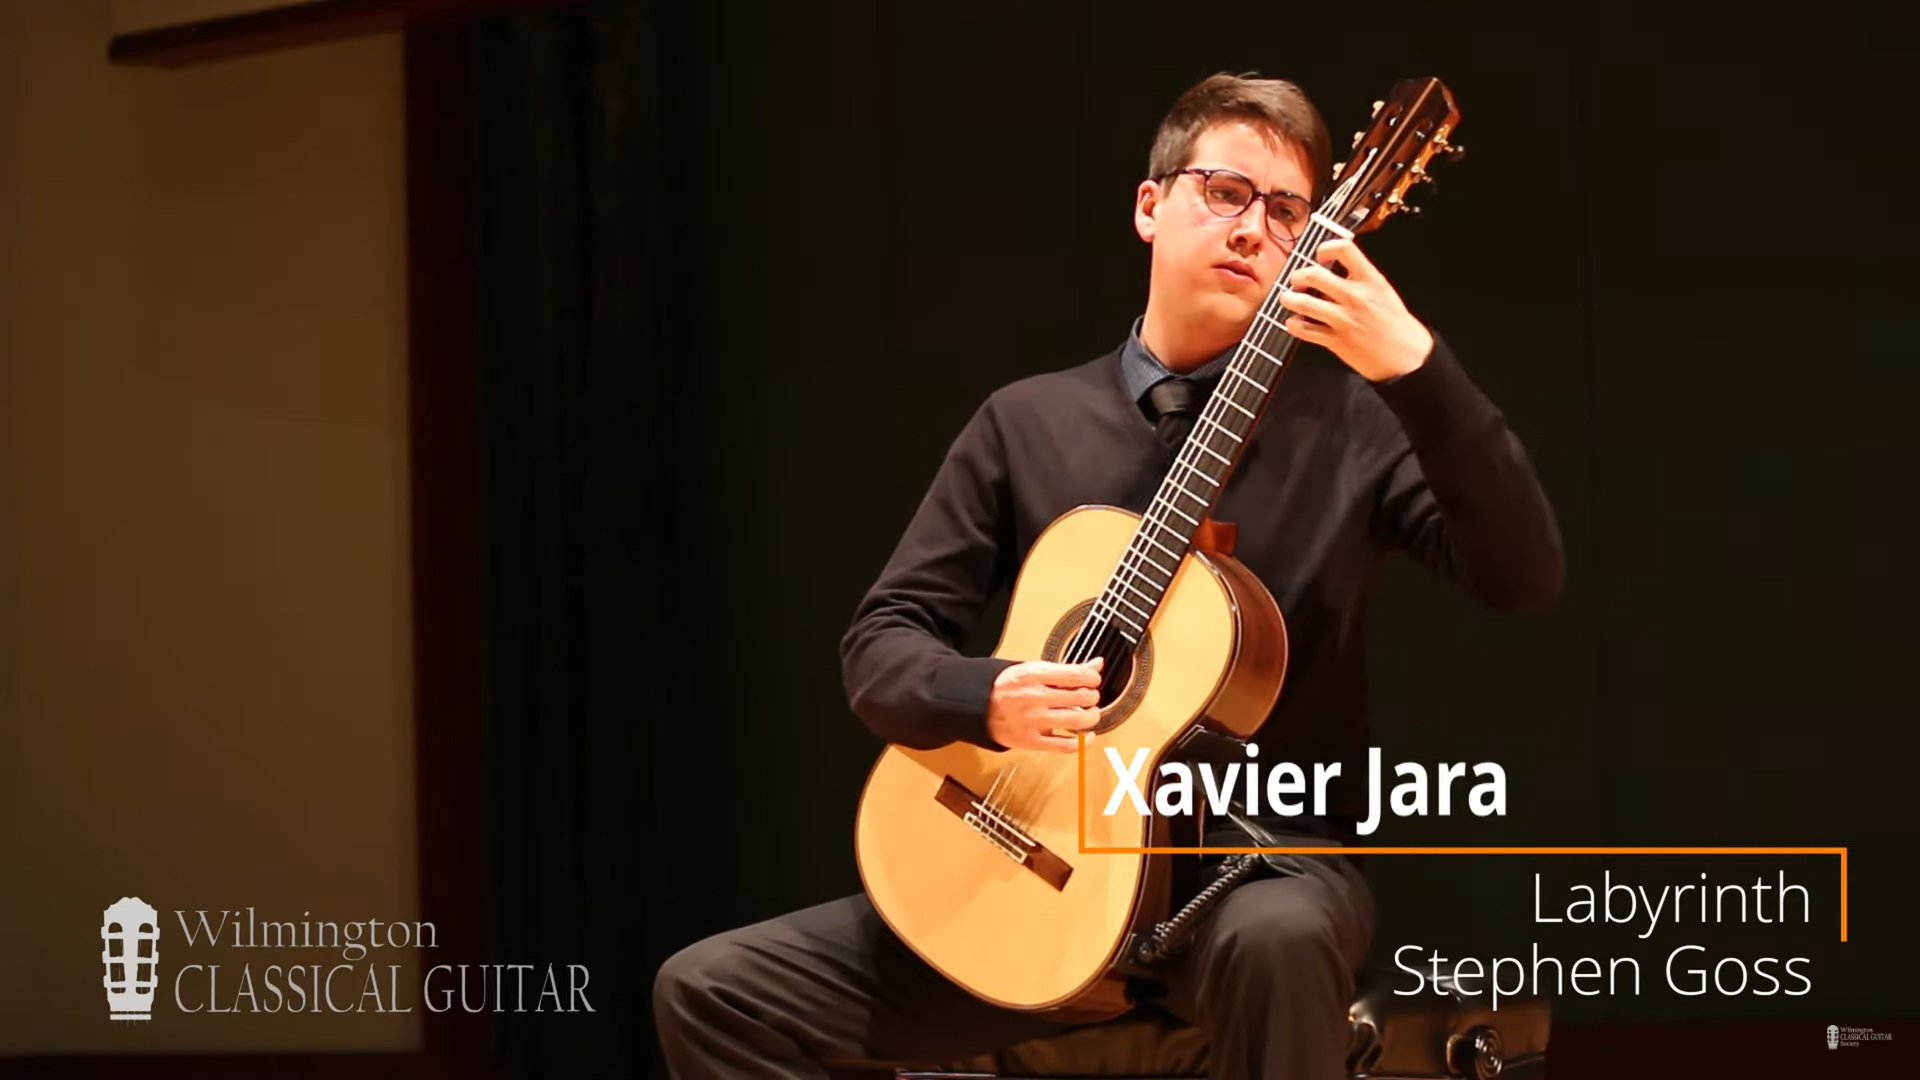 Xavier Jara performs Labyrinth by Stephen Goss